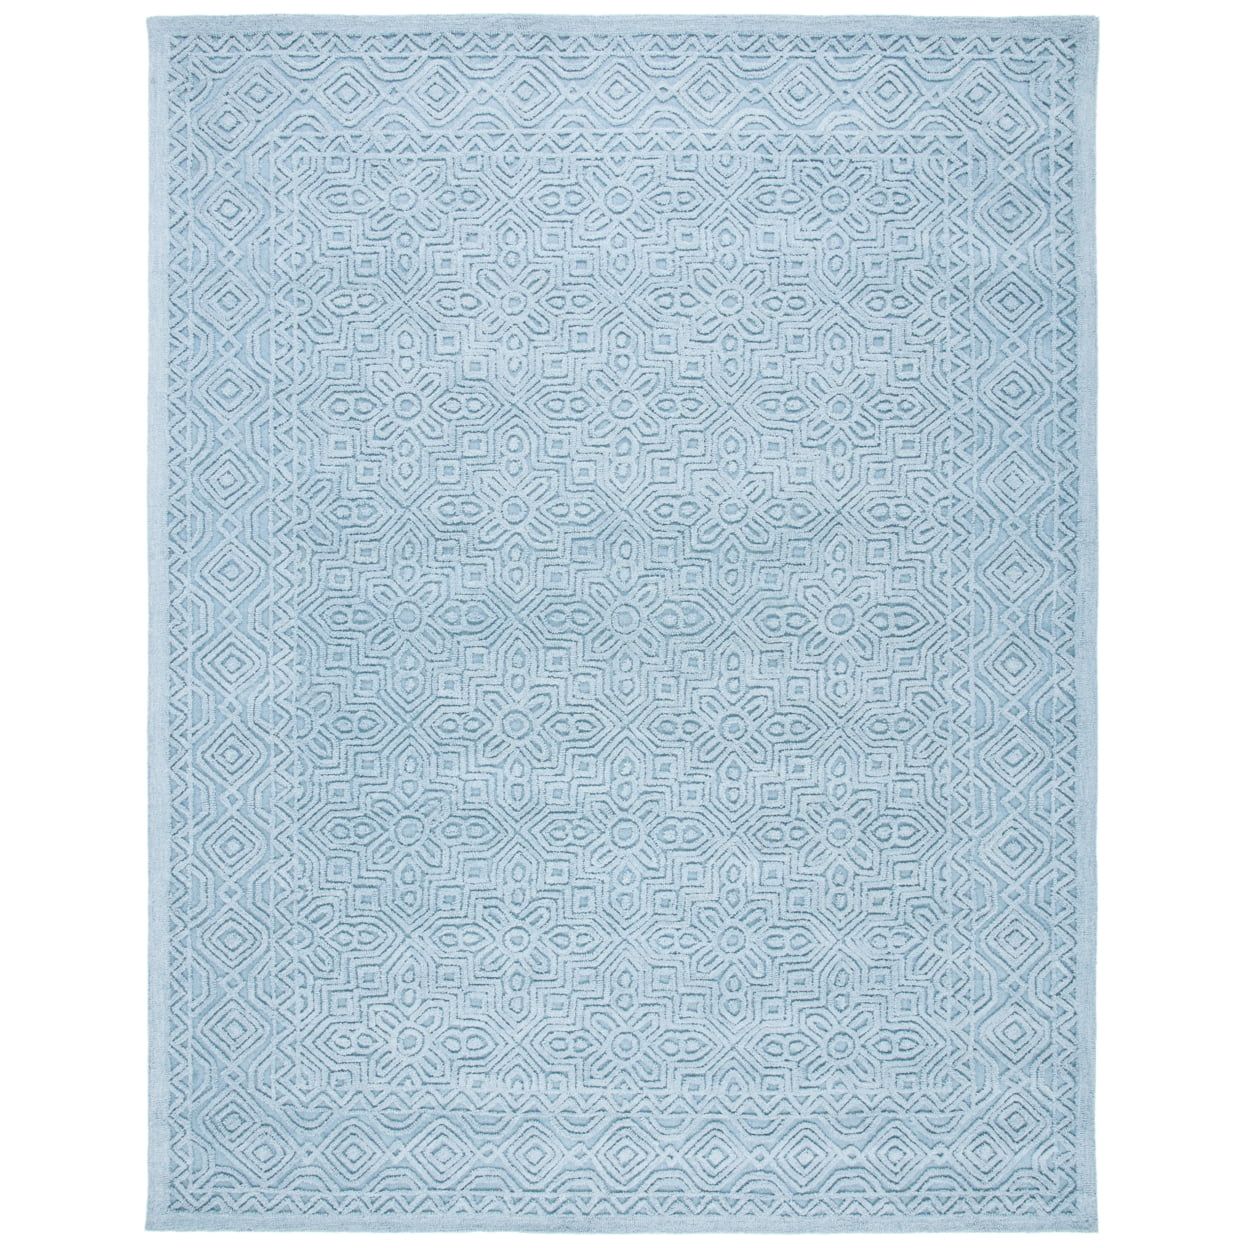 Handmade Textural Blue Wool Round Rug - 9' x 12'